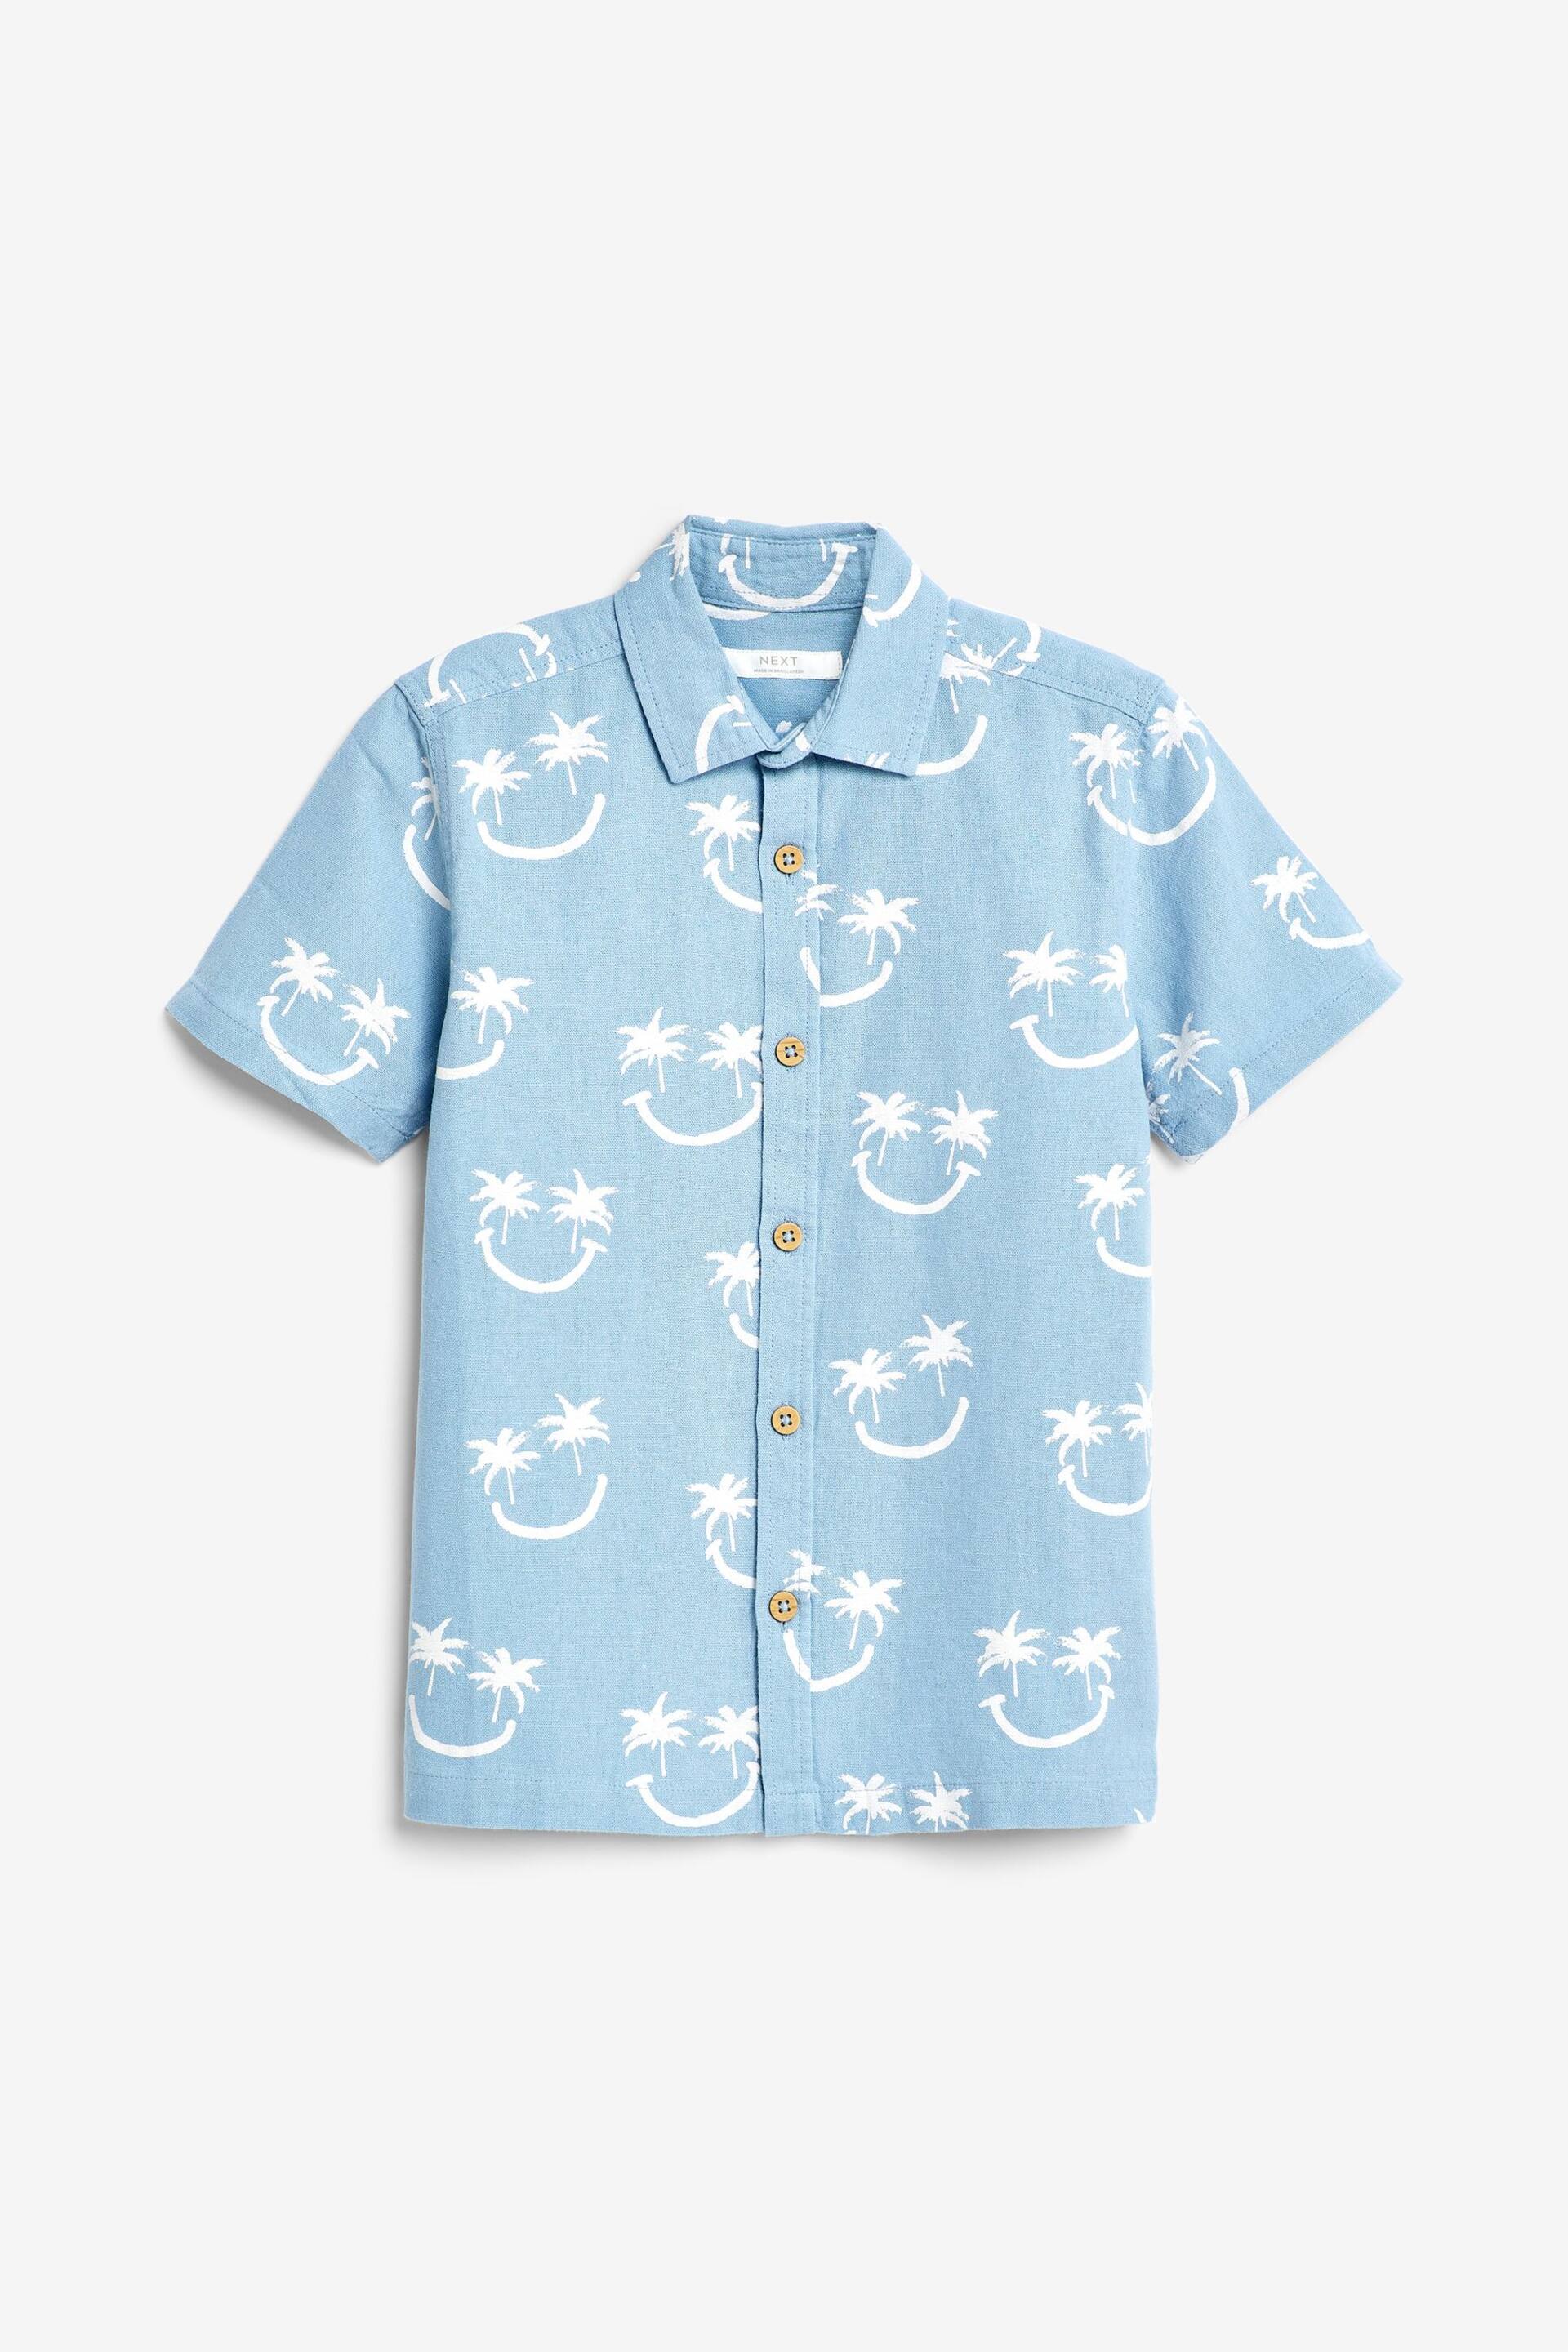 Aqua Blue Smiles Short Sleeve Blended Linen Printed Shirt (3-16yrs) - Image 2 of 3